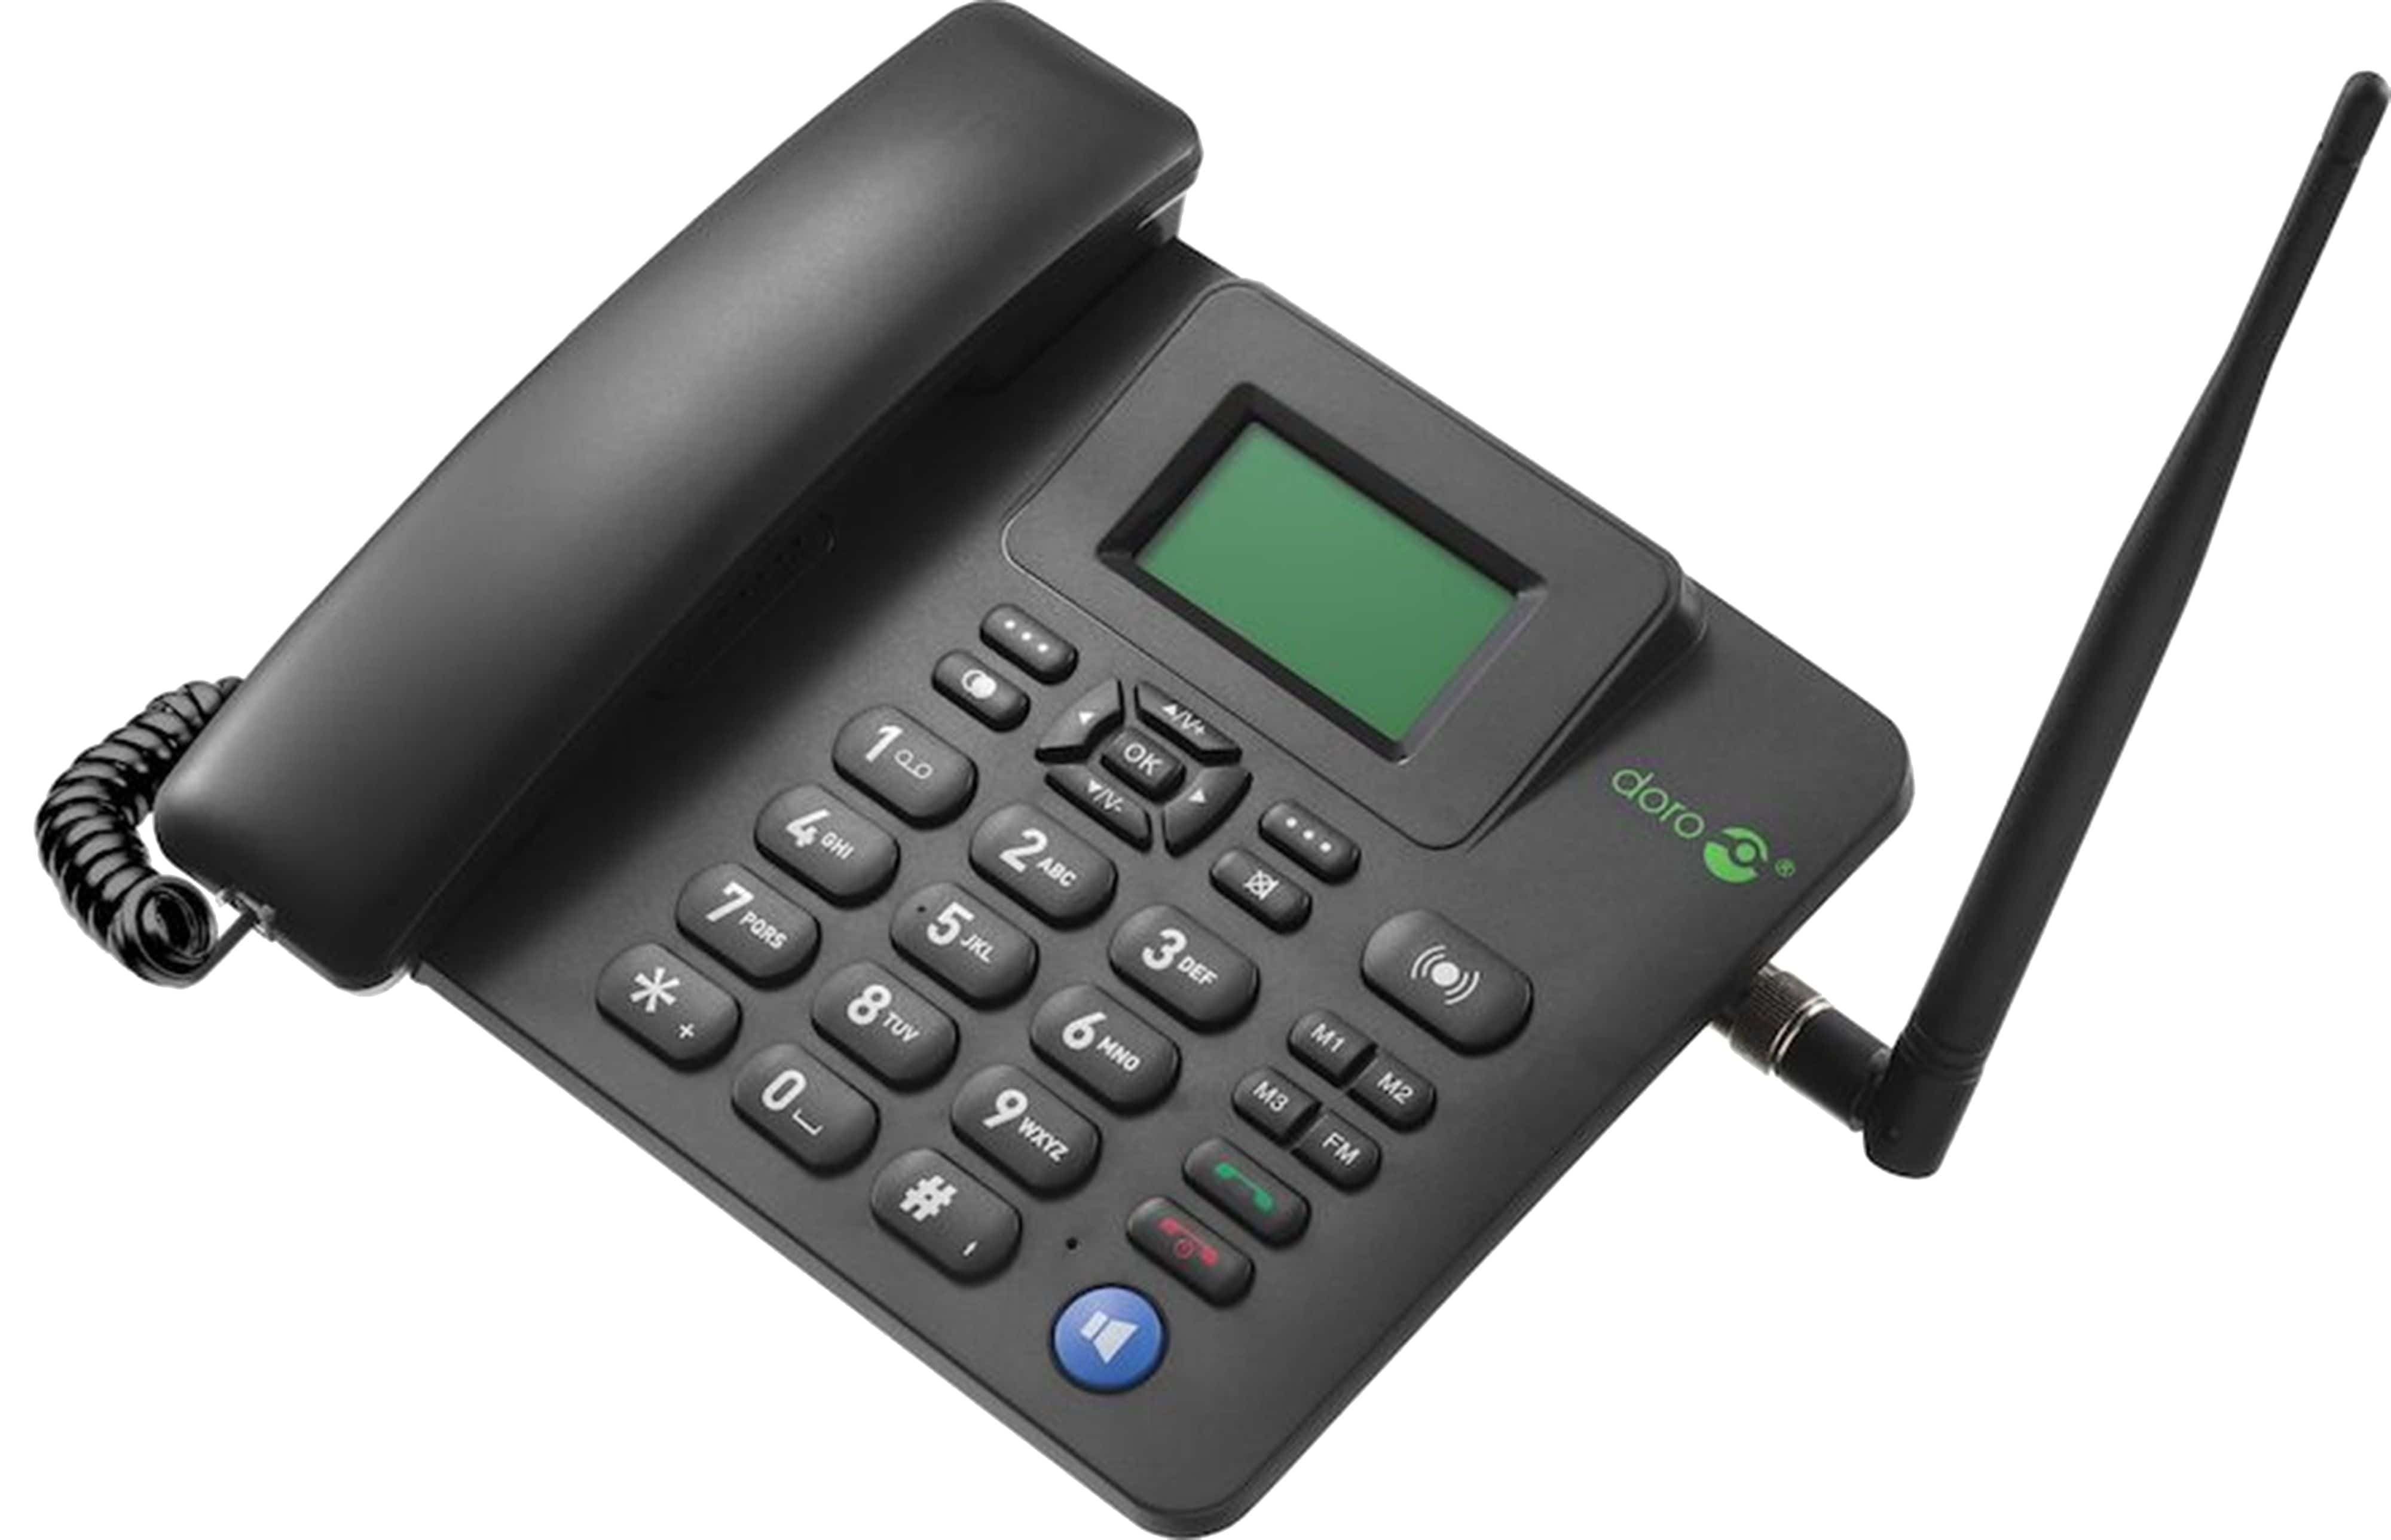 Doro DORO Telefon 4100H Telefon Kabelgebundenes